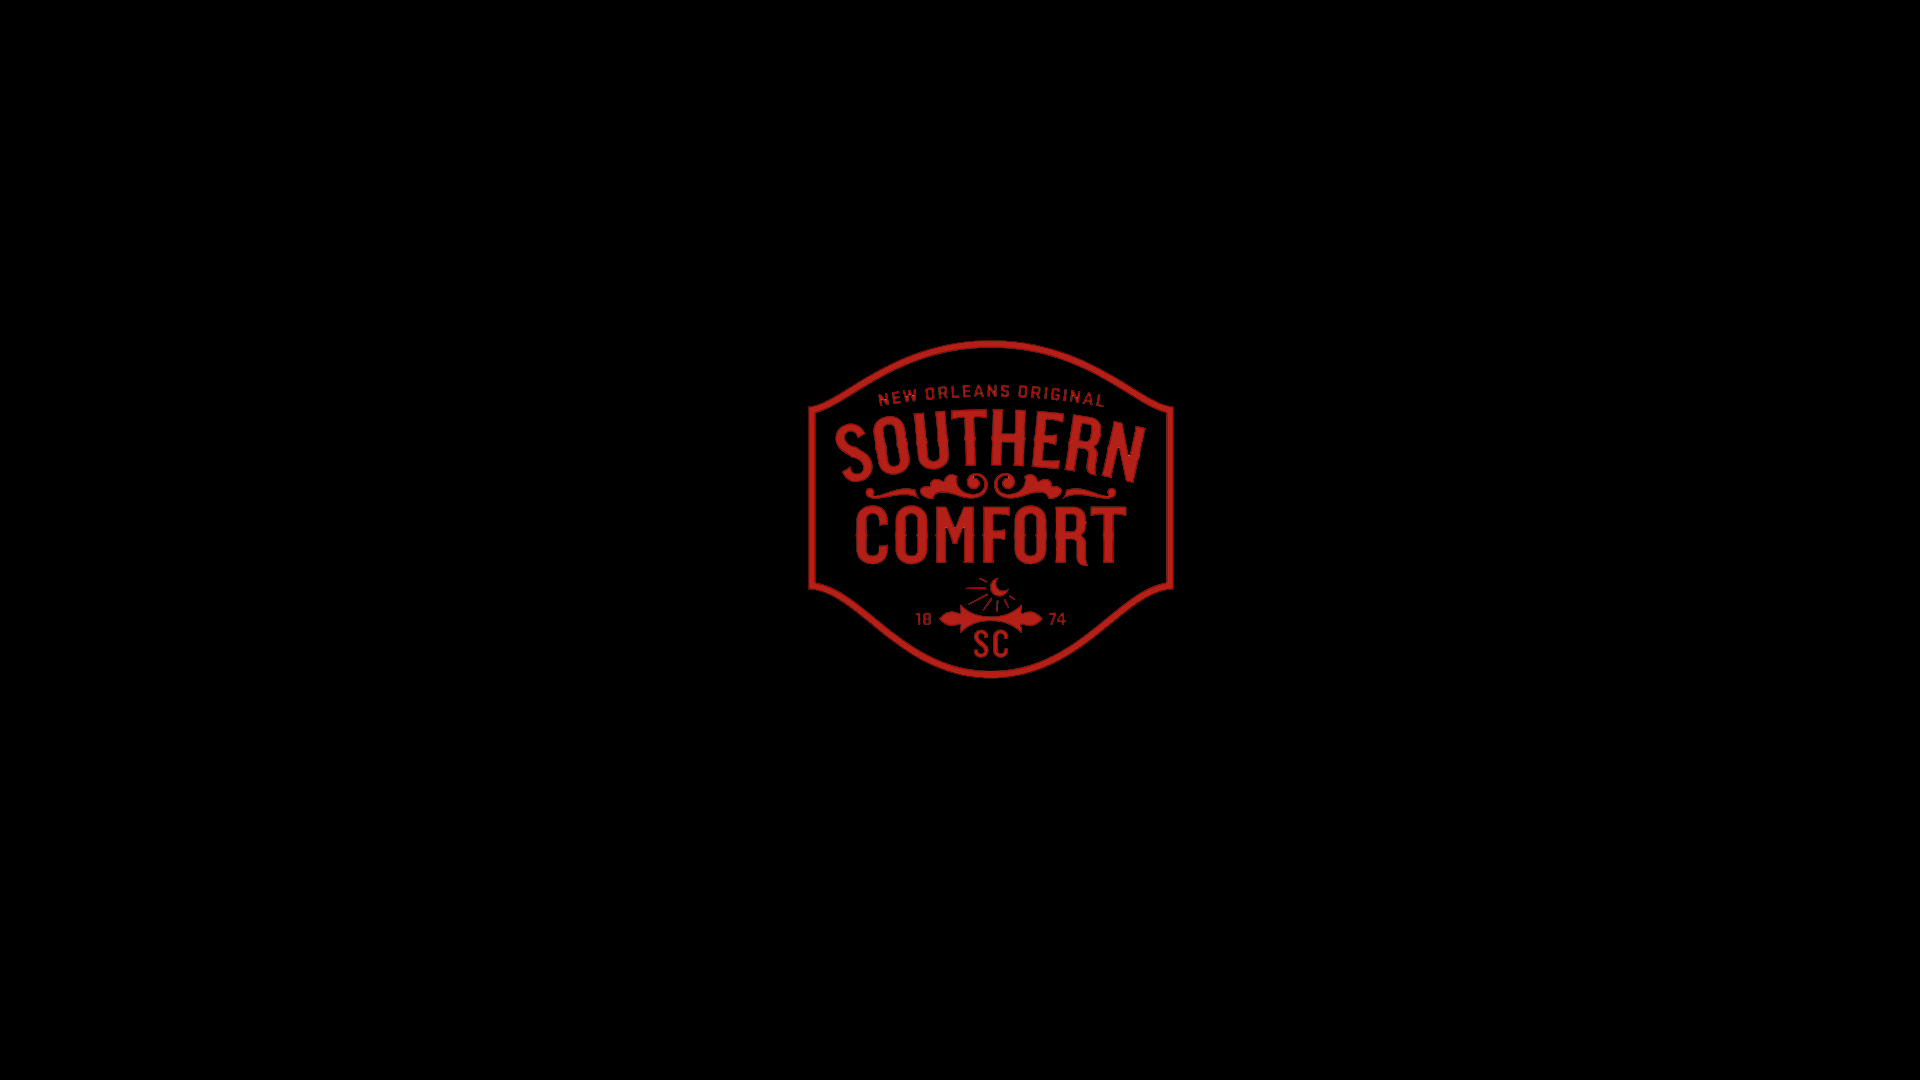 Southern Comfort Alcohol Minimal Black Rum wallpaper background